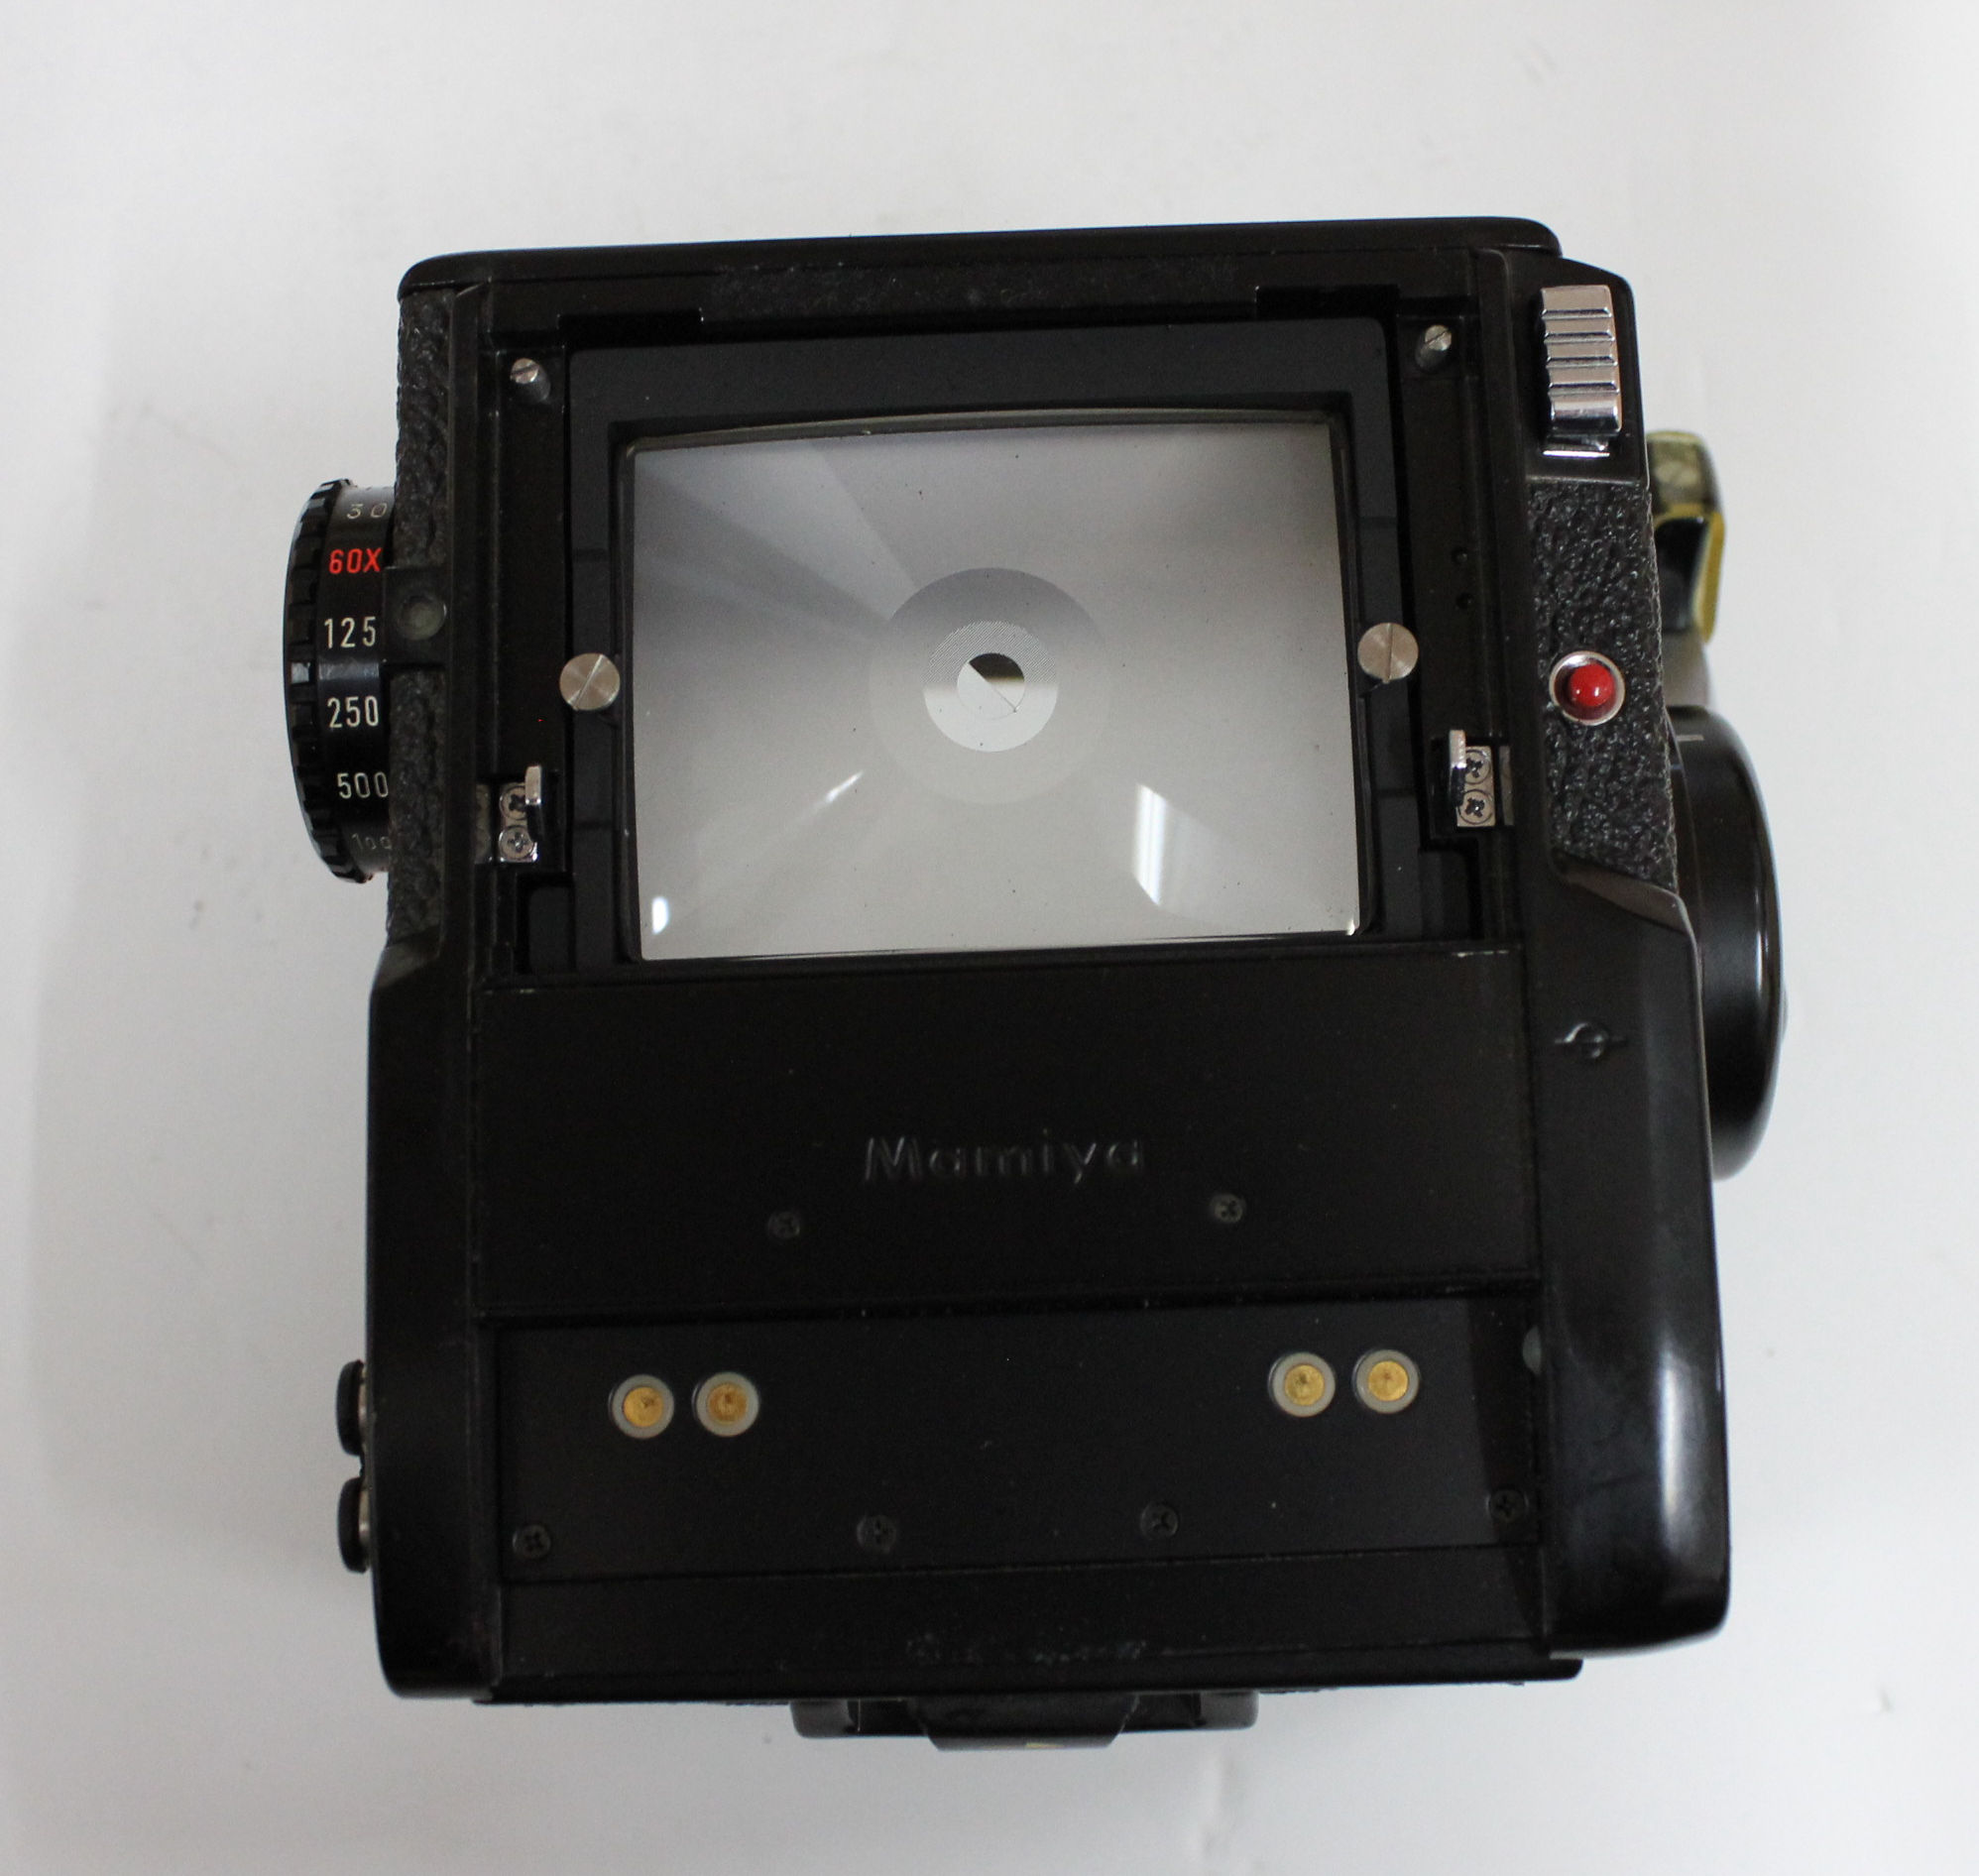  Mamiya M645 1000S Medium Format Film Camera Body from Japan Photo 13